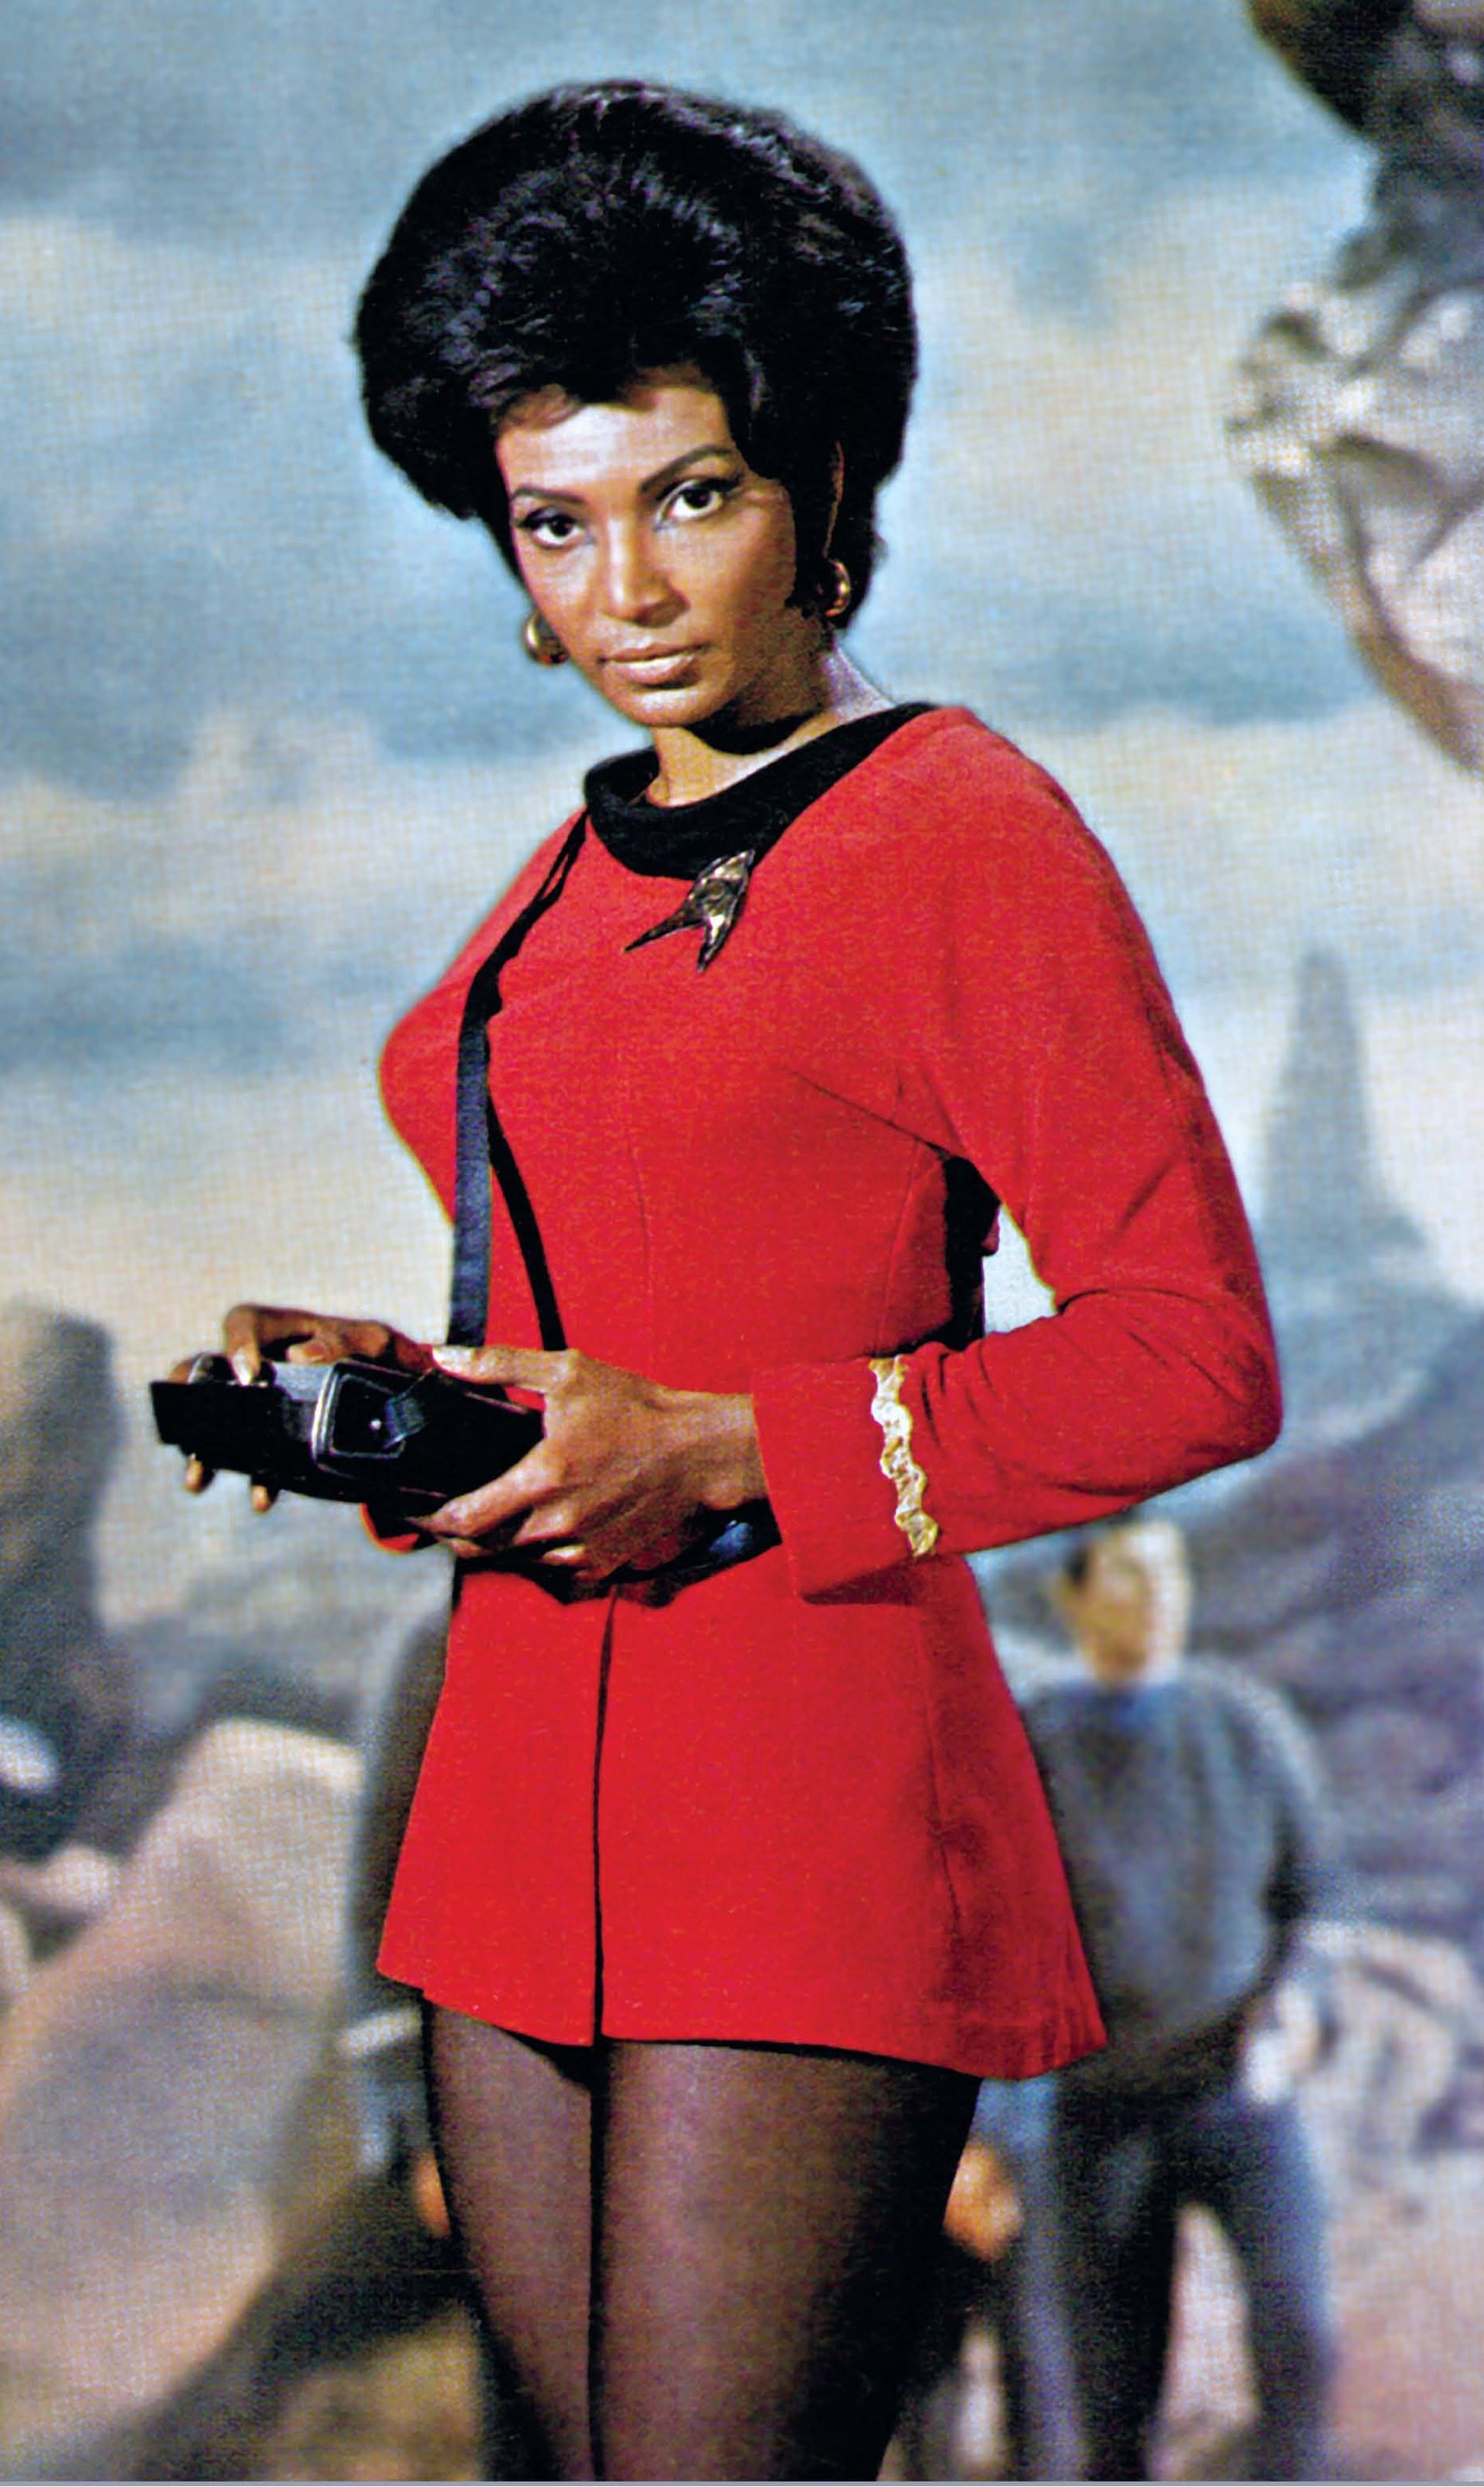 star trek lieutenant uhura actress